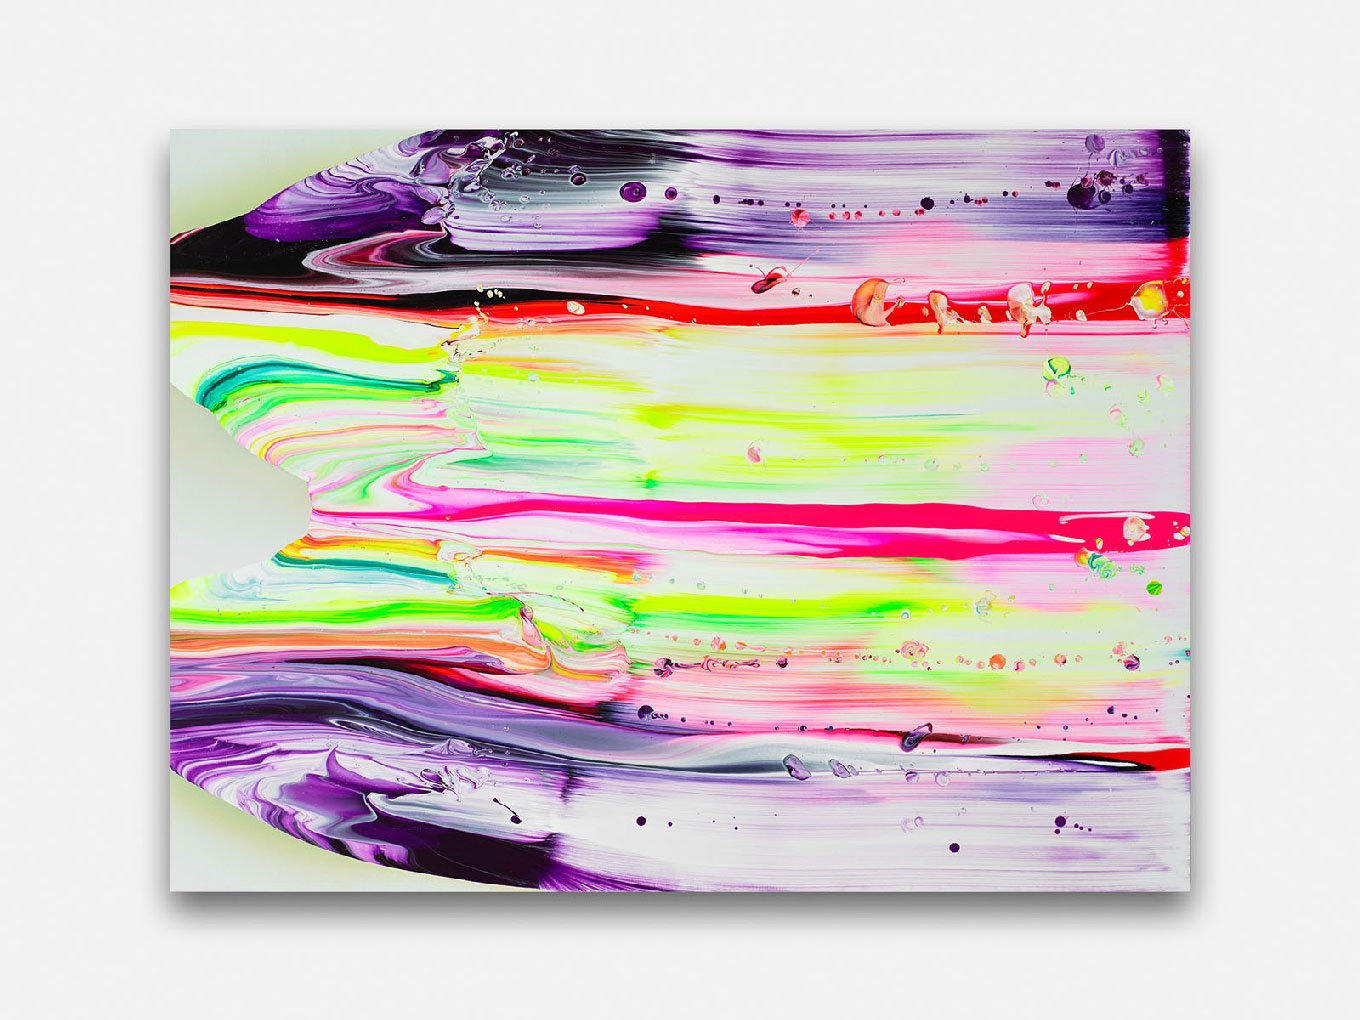 Yago Hortal - SP42. 2013. Acrylic on linen. 100 x 130 cm